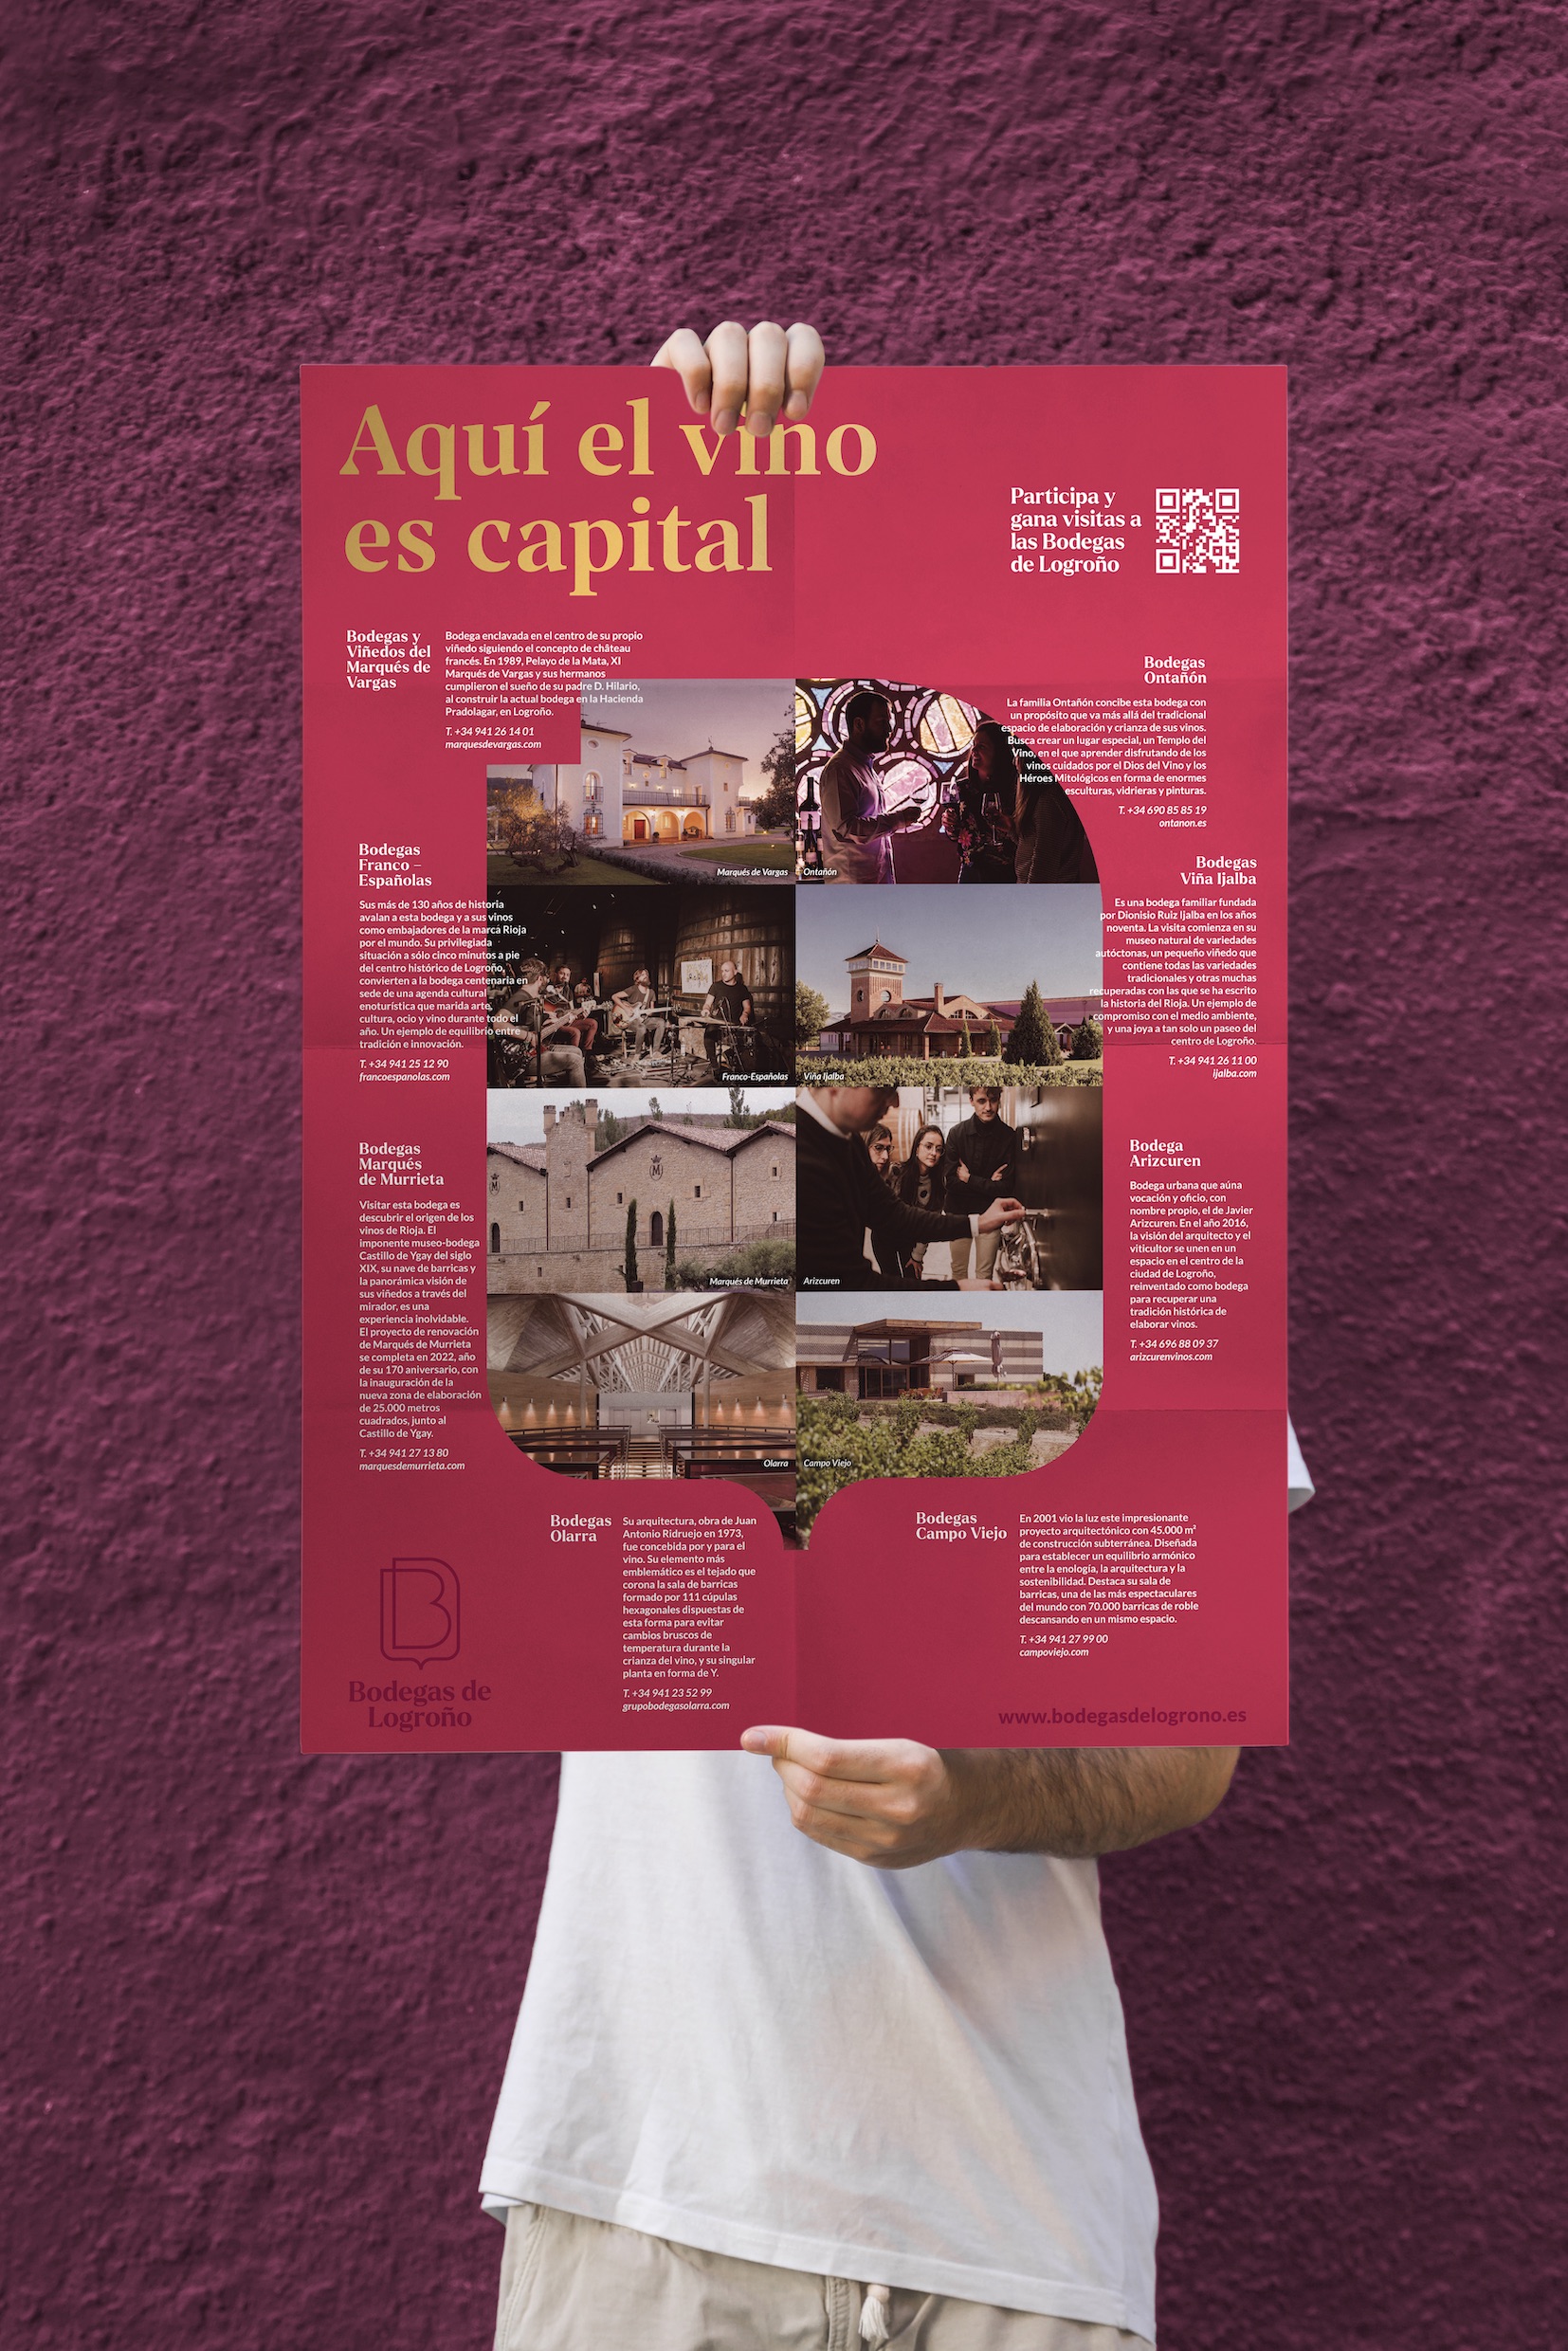 Bodegas de Logroño, aquí el vino es capital by TSMGO | The show must go on - Creative Work - $i